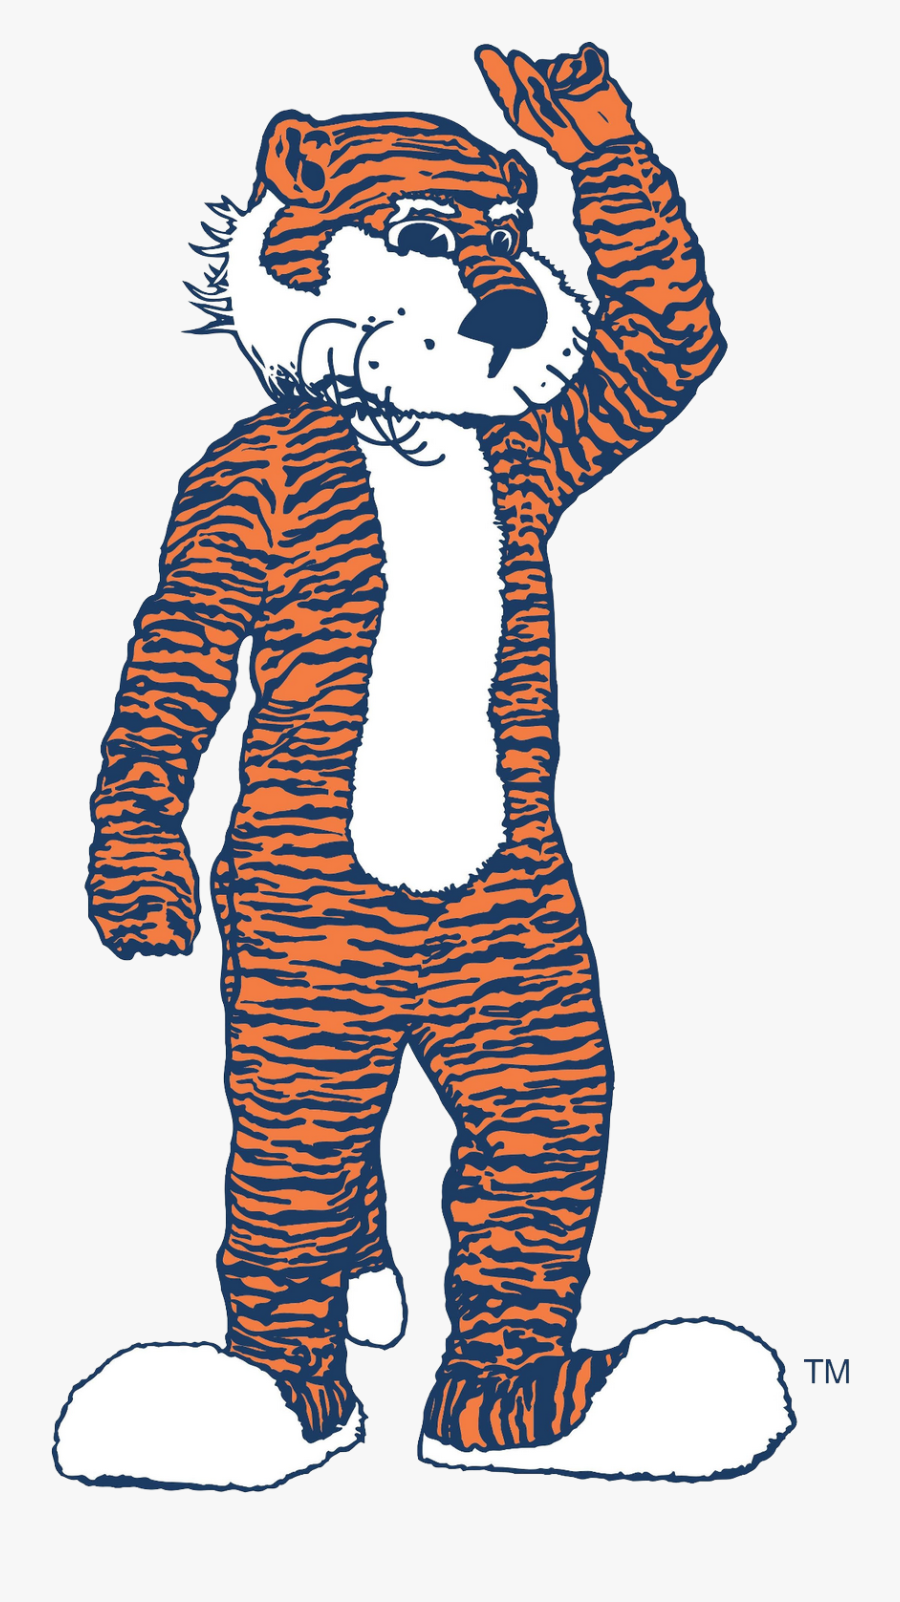 Auburn University Seal And Logos Png - Clemson Tigers Mascot Png, Transparent Clipart